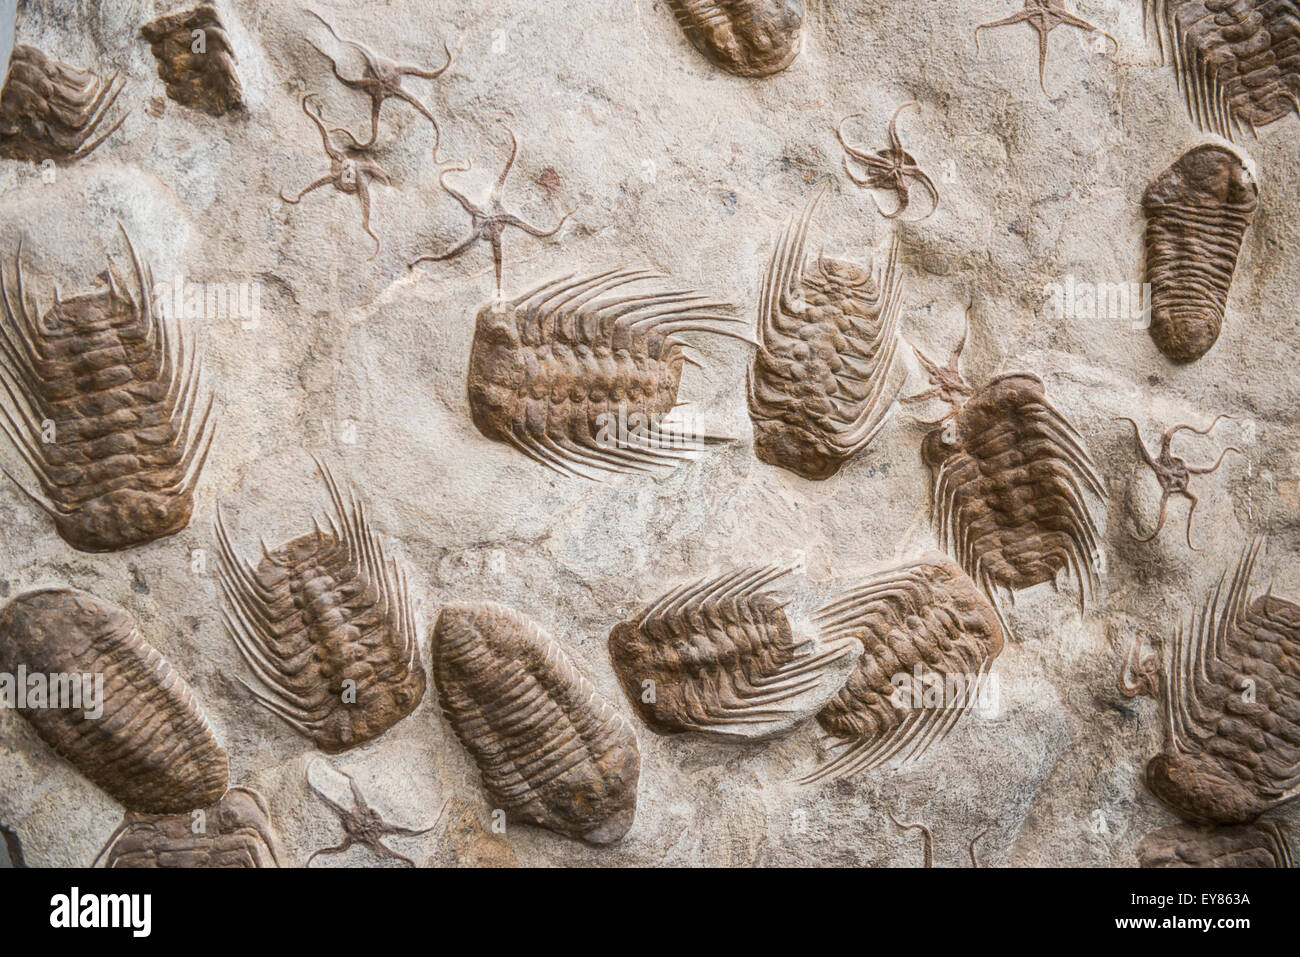 Trilobita, fossil trilobites, found near Rissani, Morocco Stock Photo